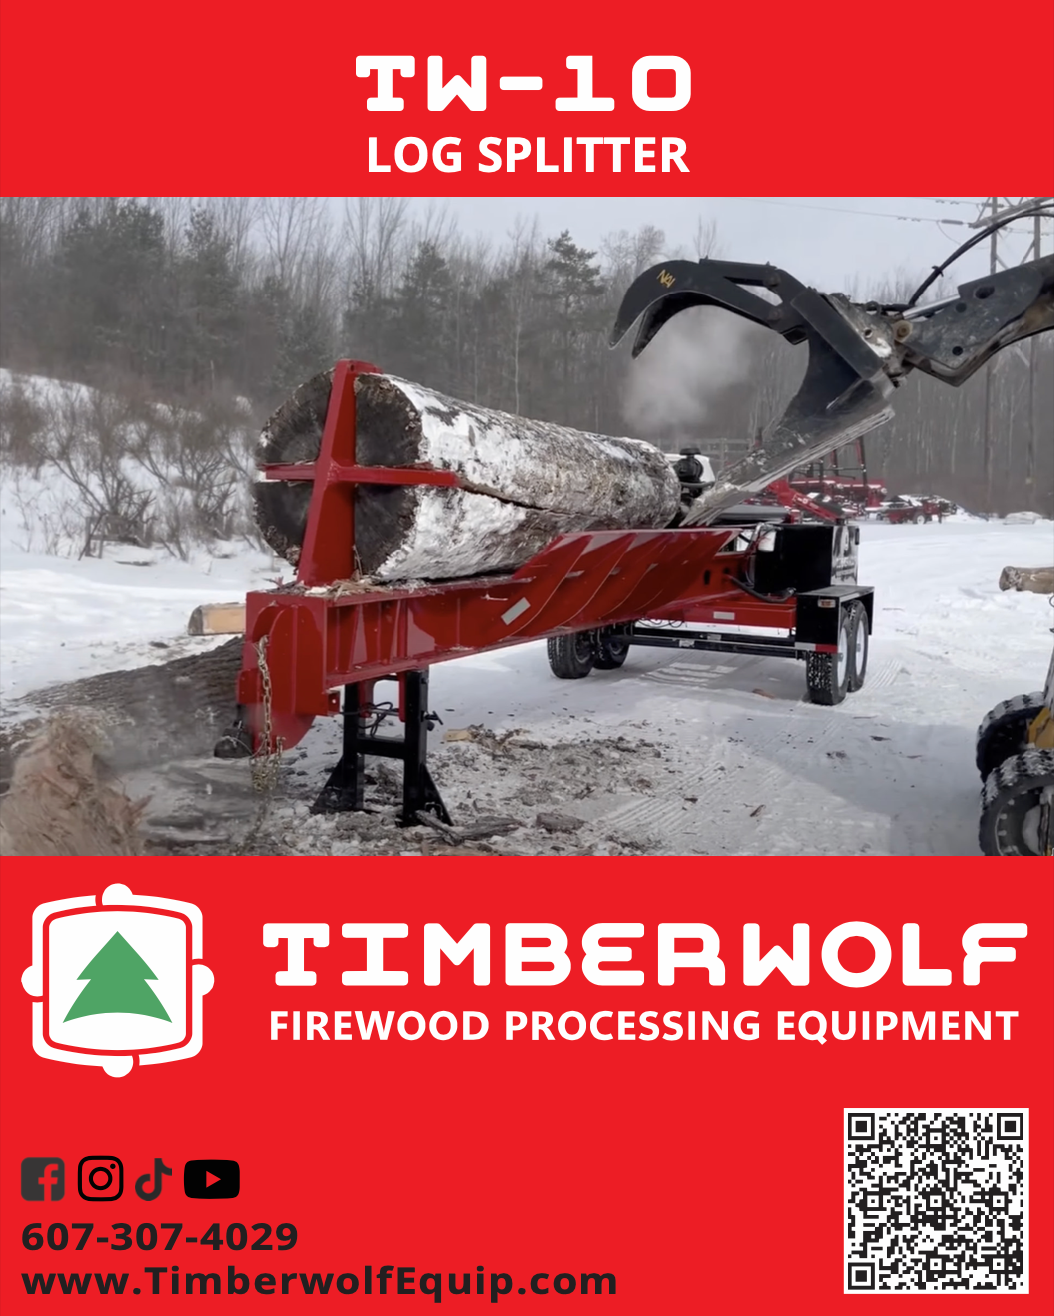 Timberwolf Firewood Processing Equipment TW-10 Log Splitter Technical Specifications Brochure